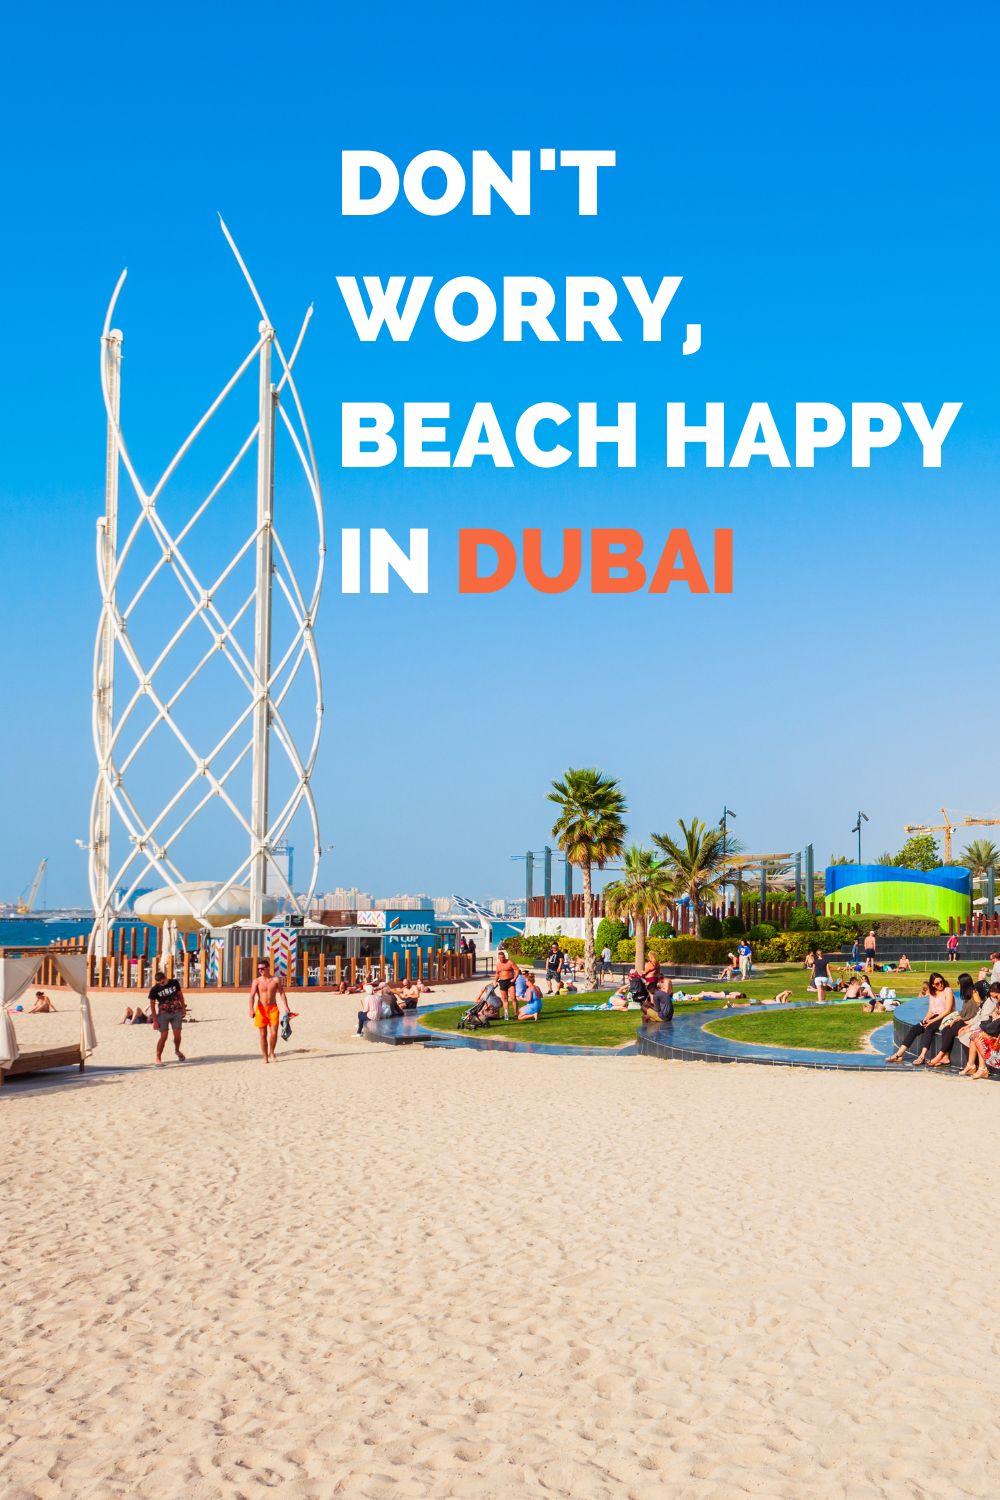 Don't worry, beach happy in Dubai